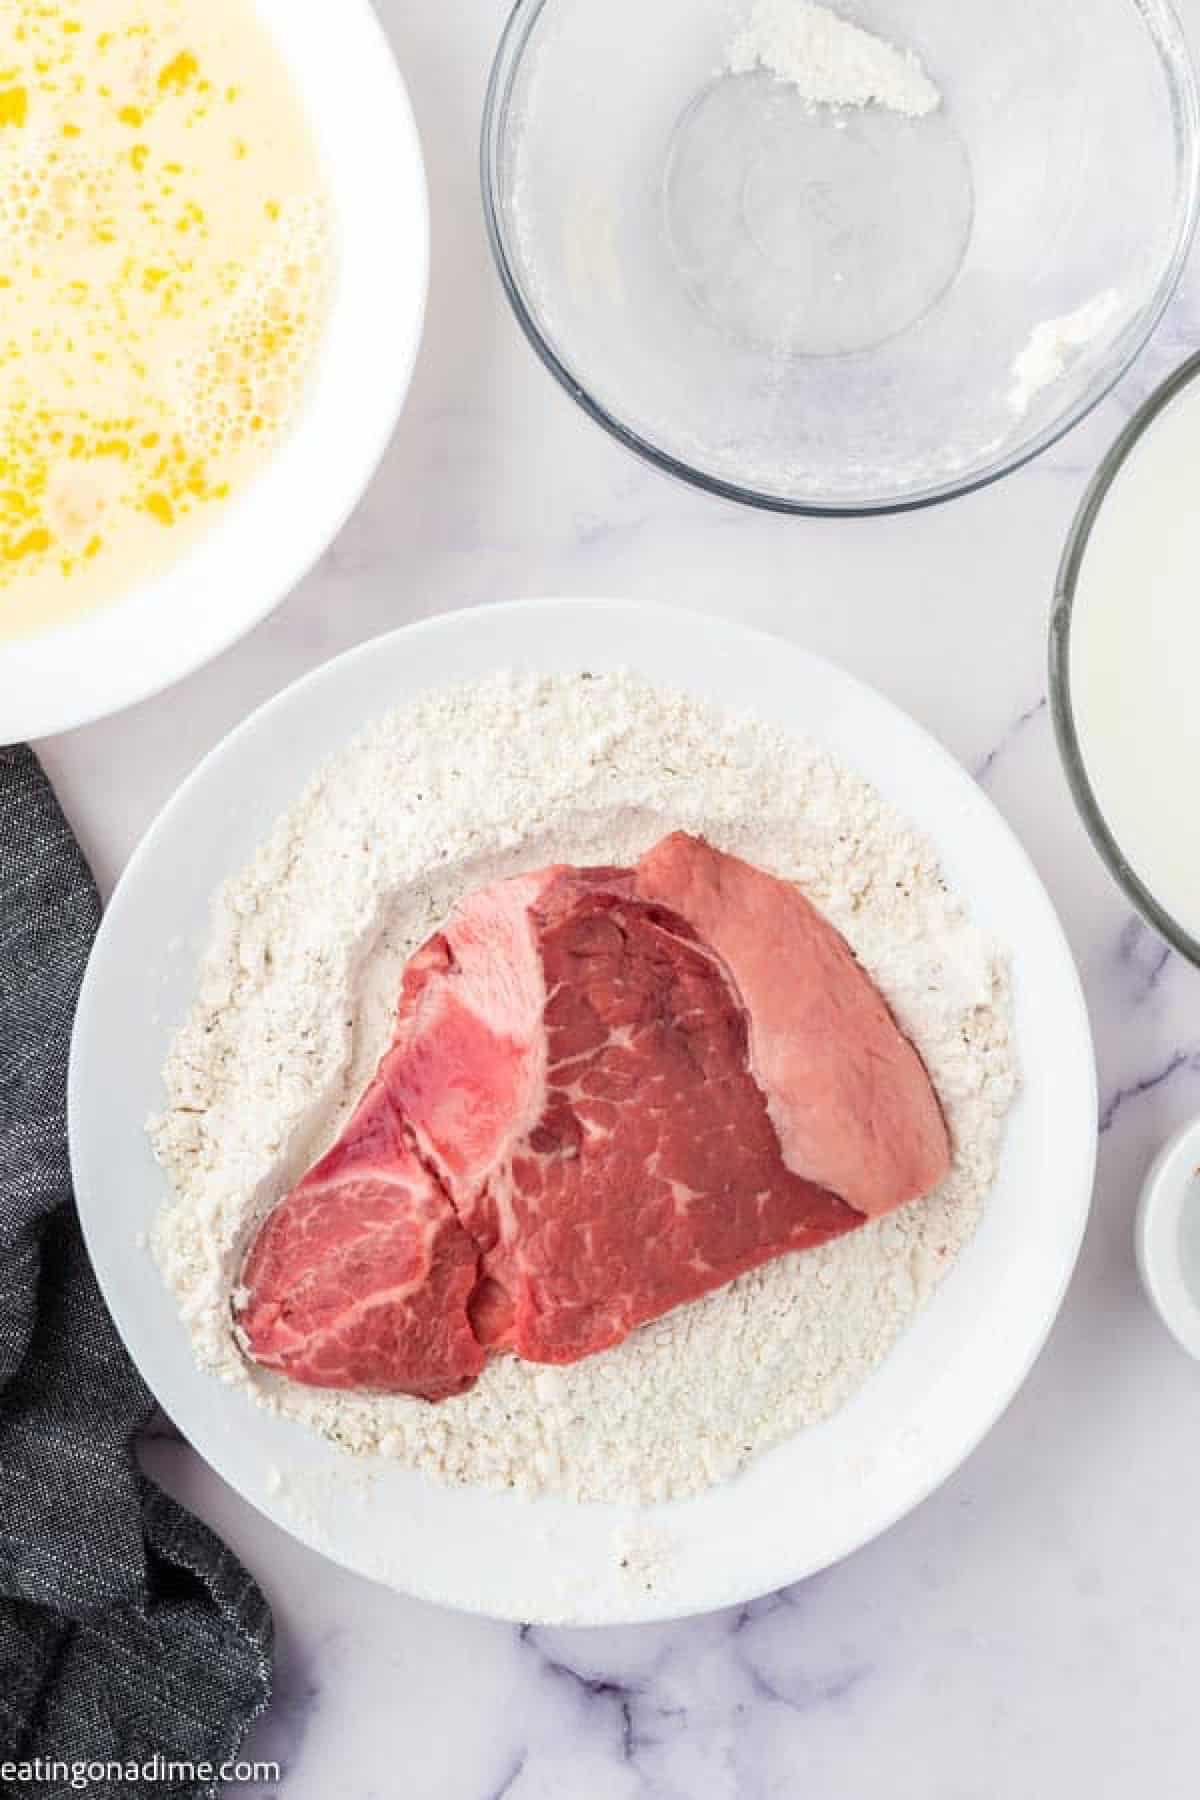 Placing the steak on flour